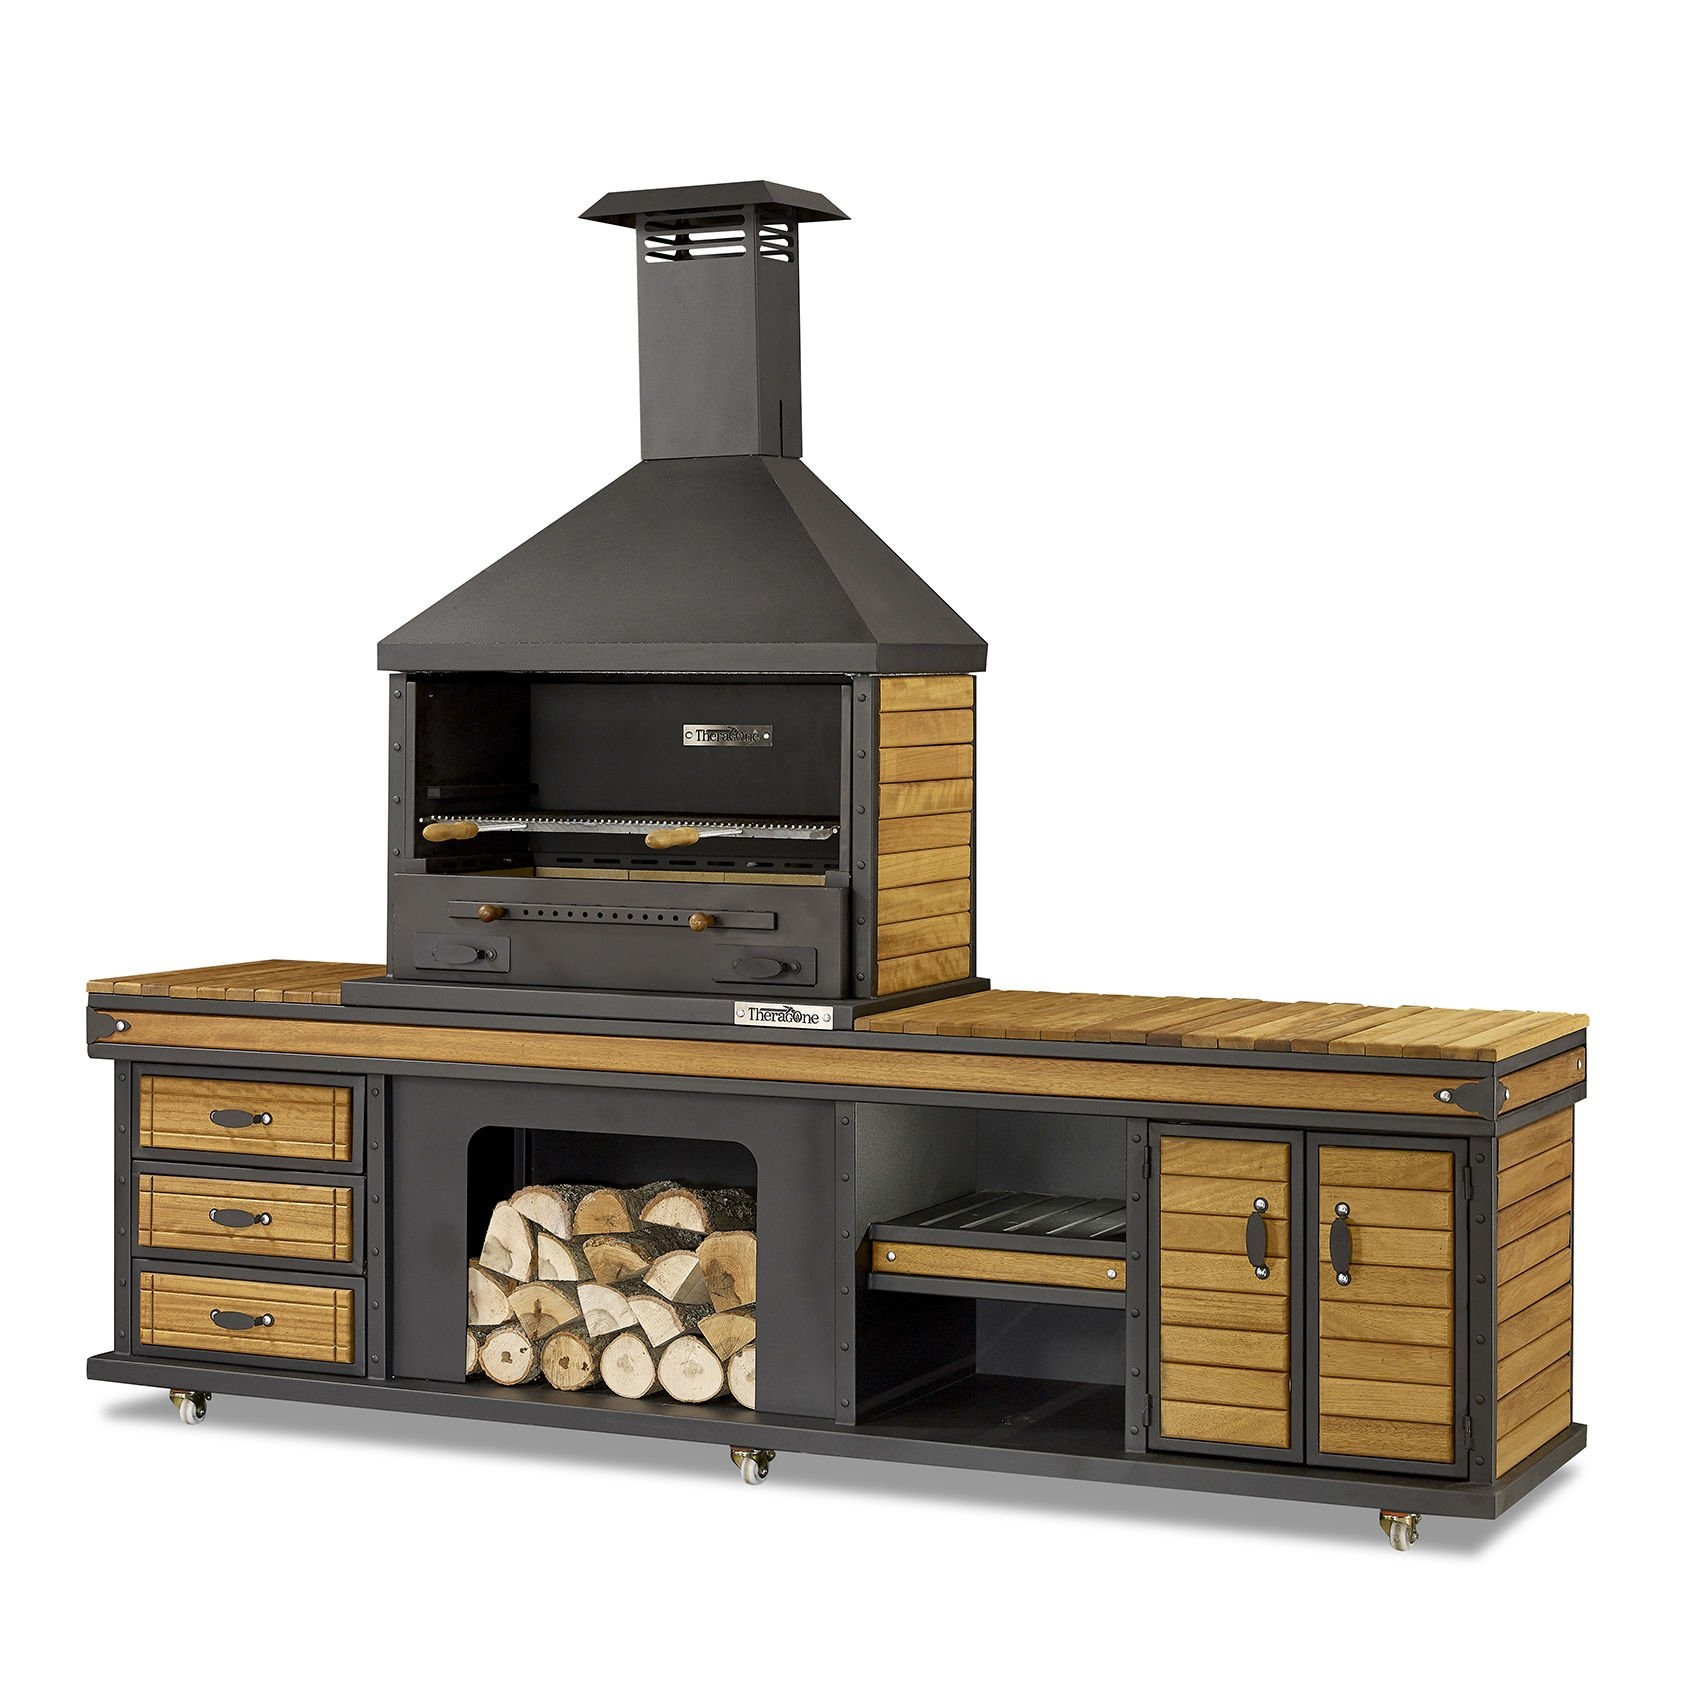 Barbecue da cucina estivo in acciaio e legno di iroko